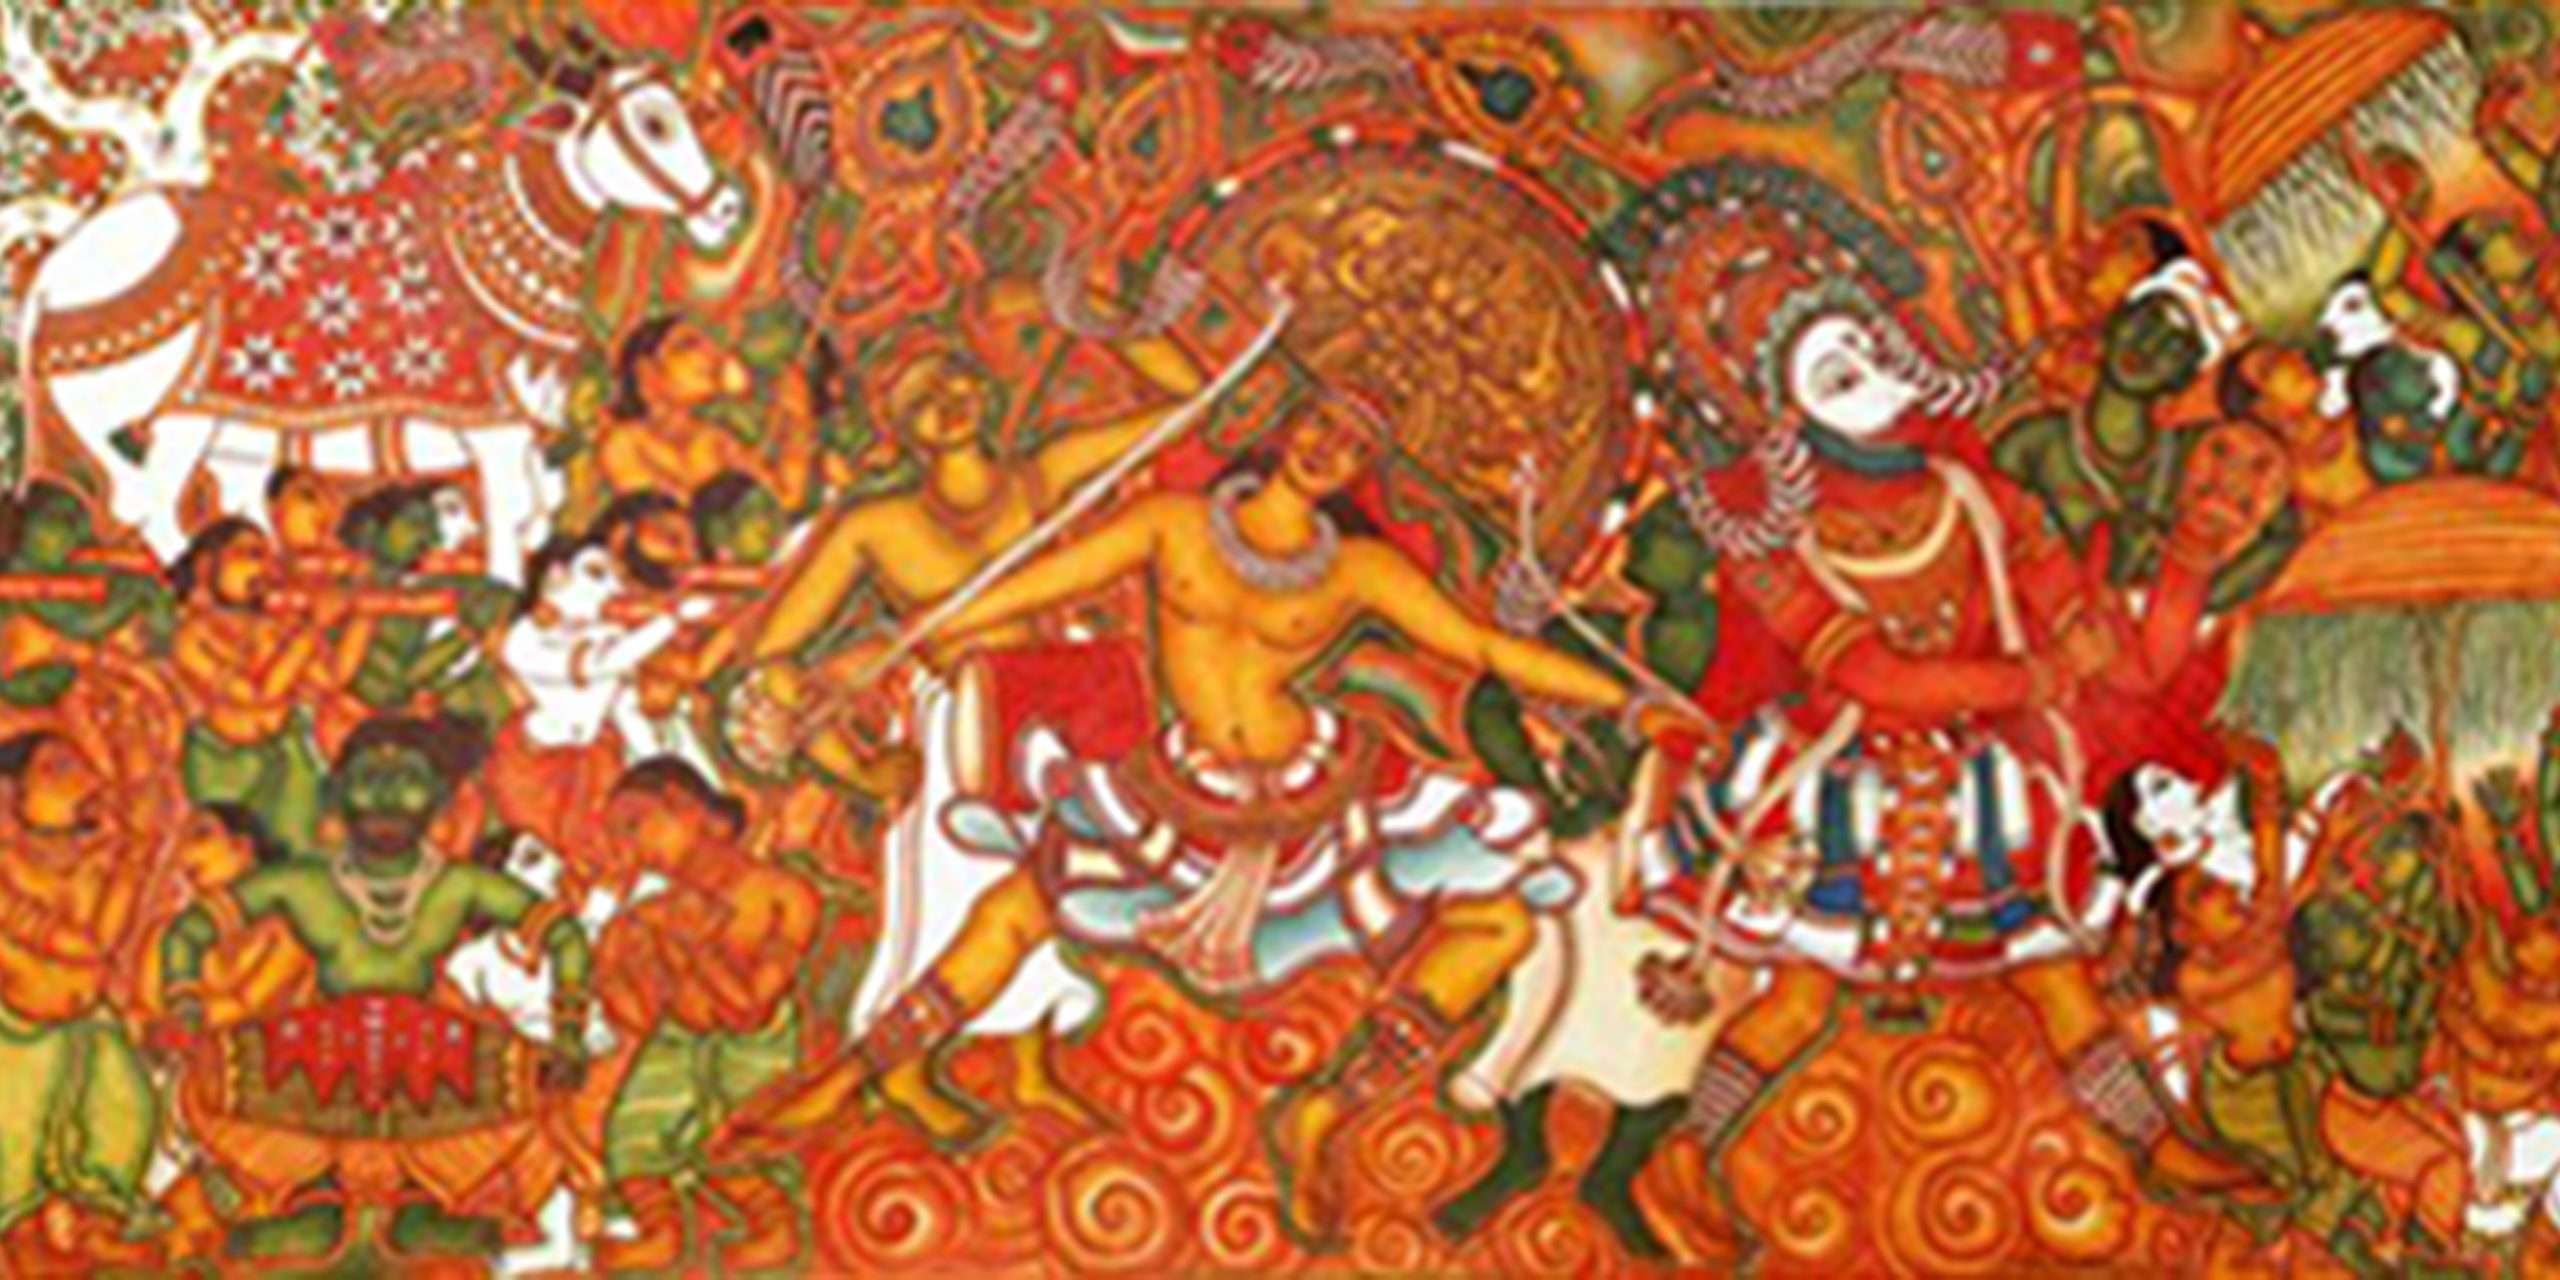 Kerala mural painting